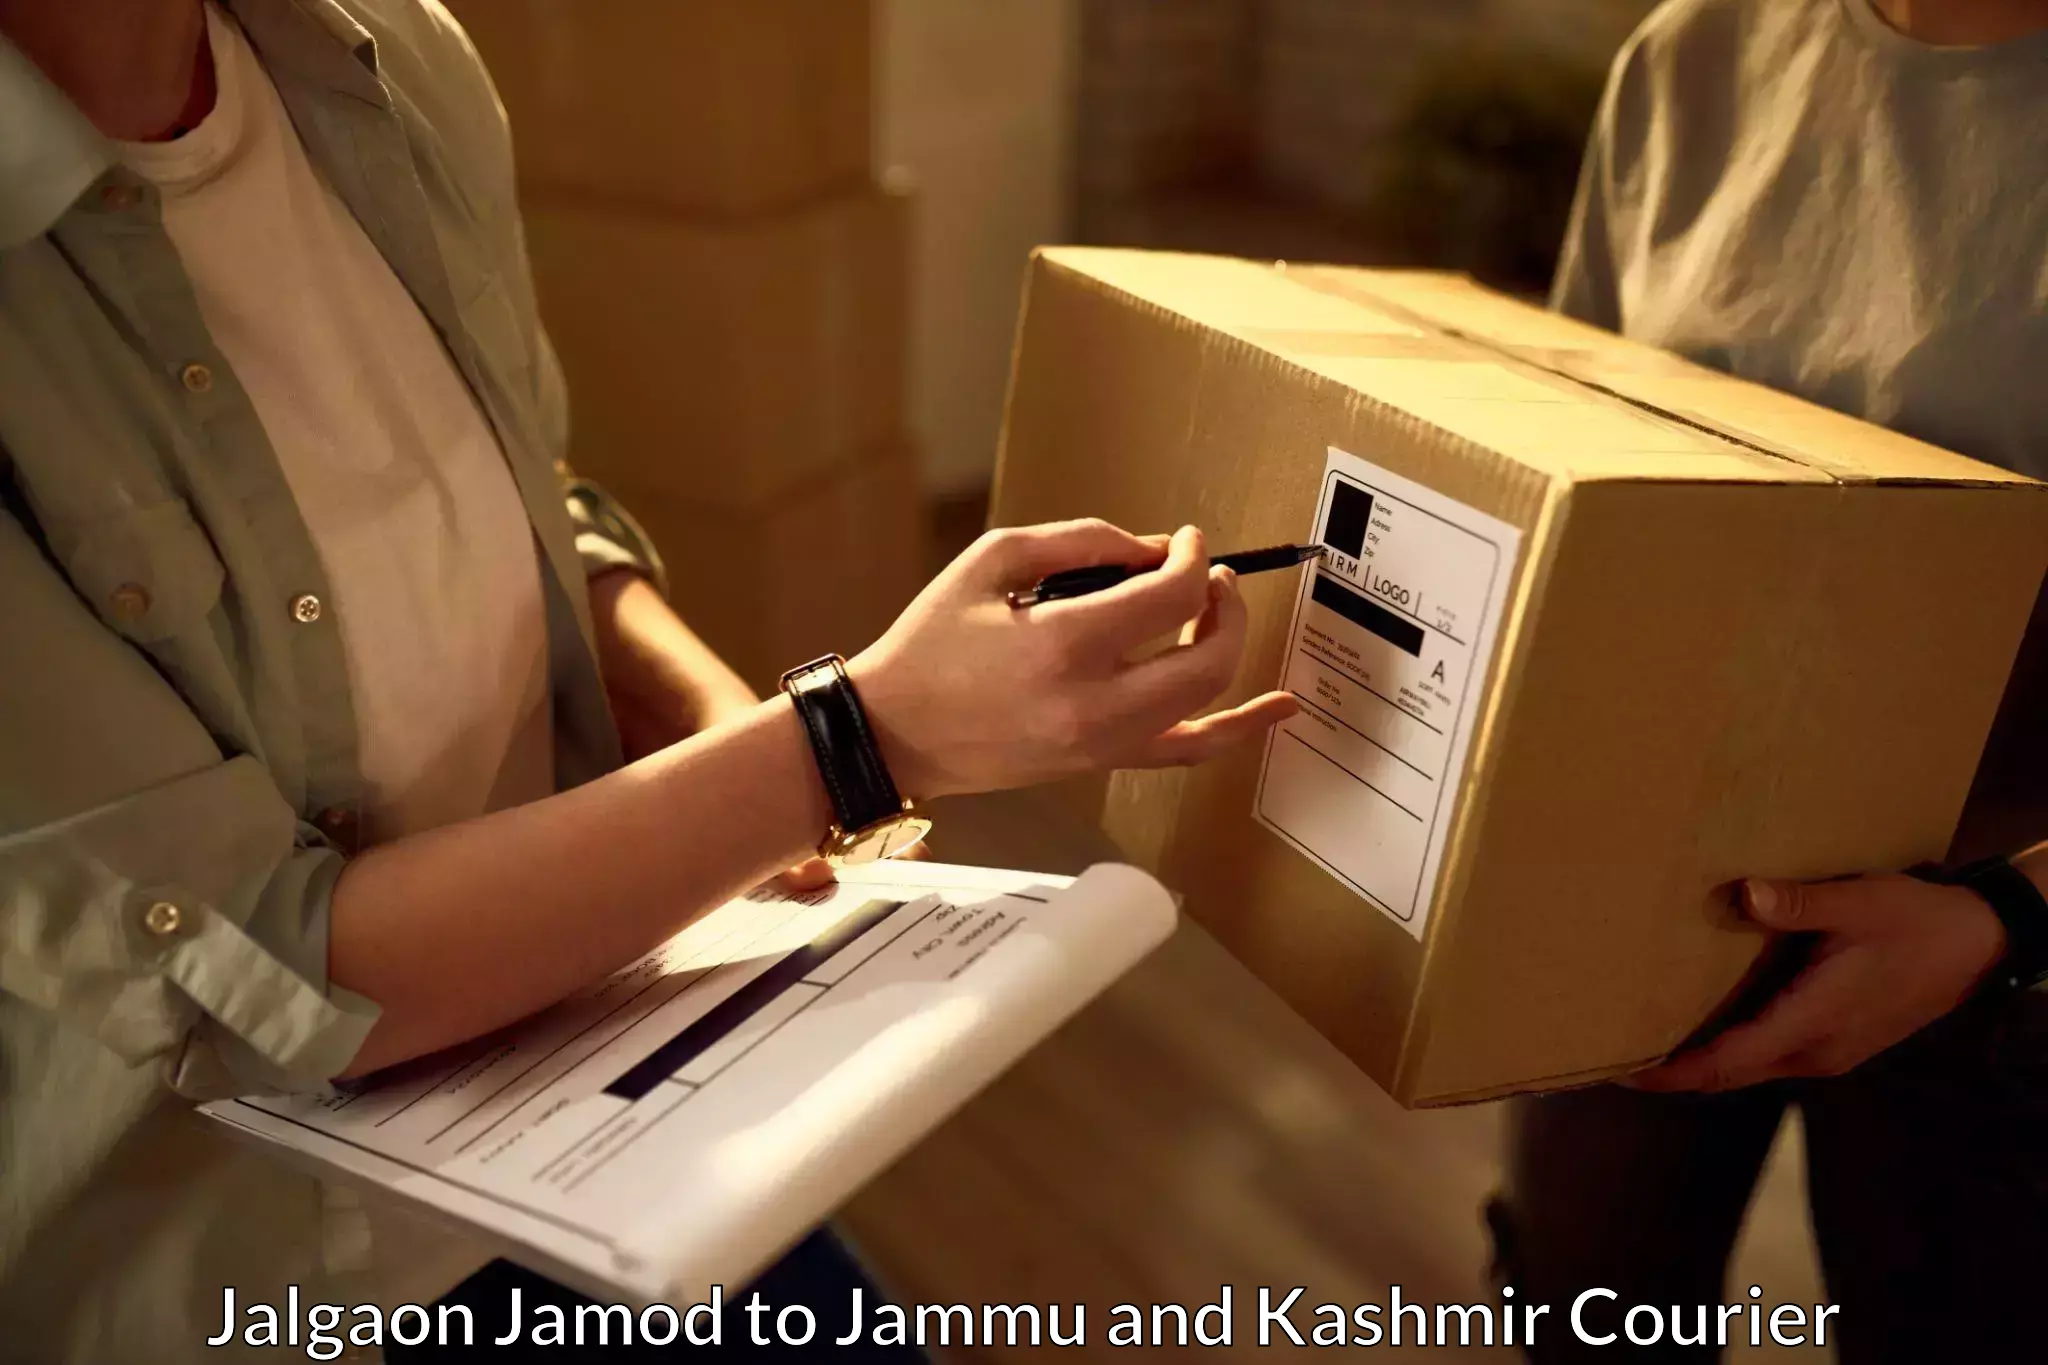 Express logistics providers Jalgaon Jamod to Jammu and Kashmir